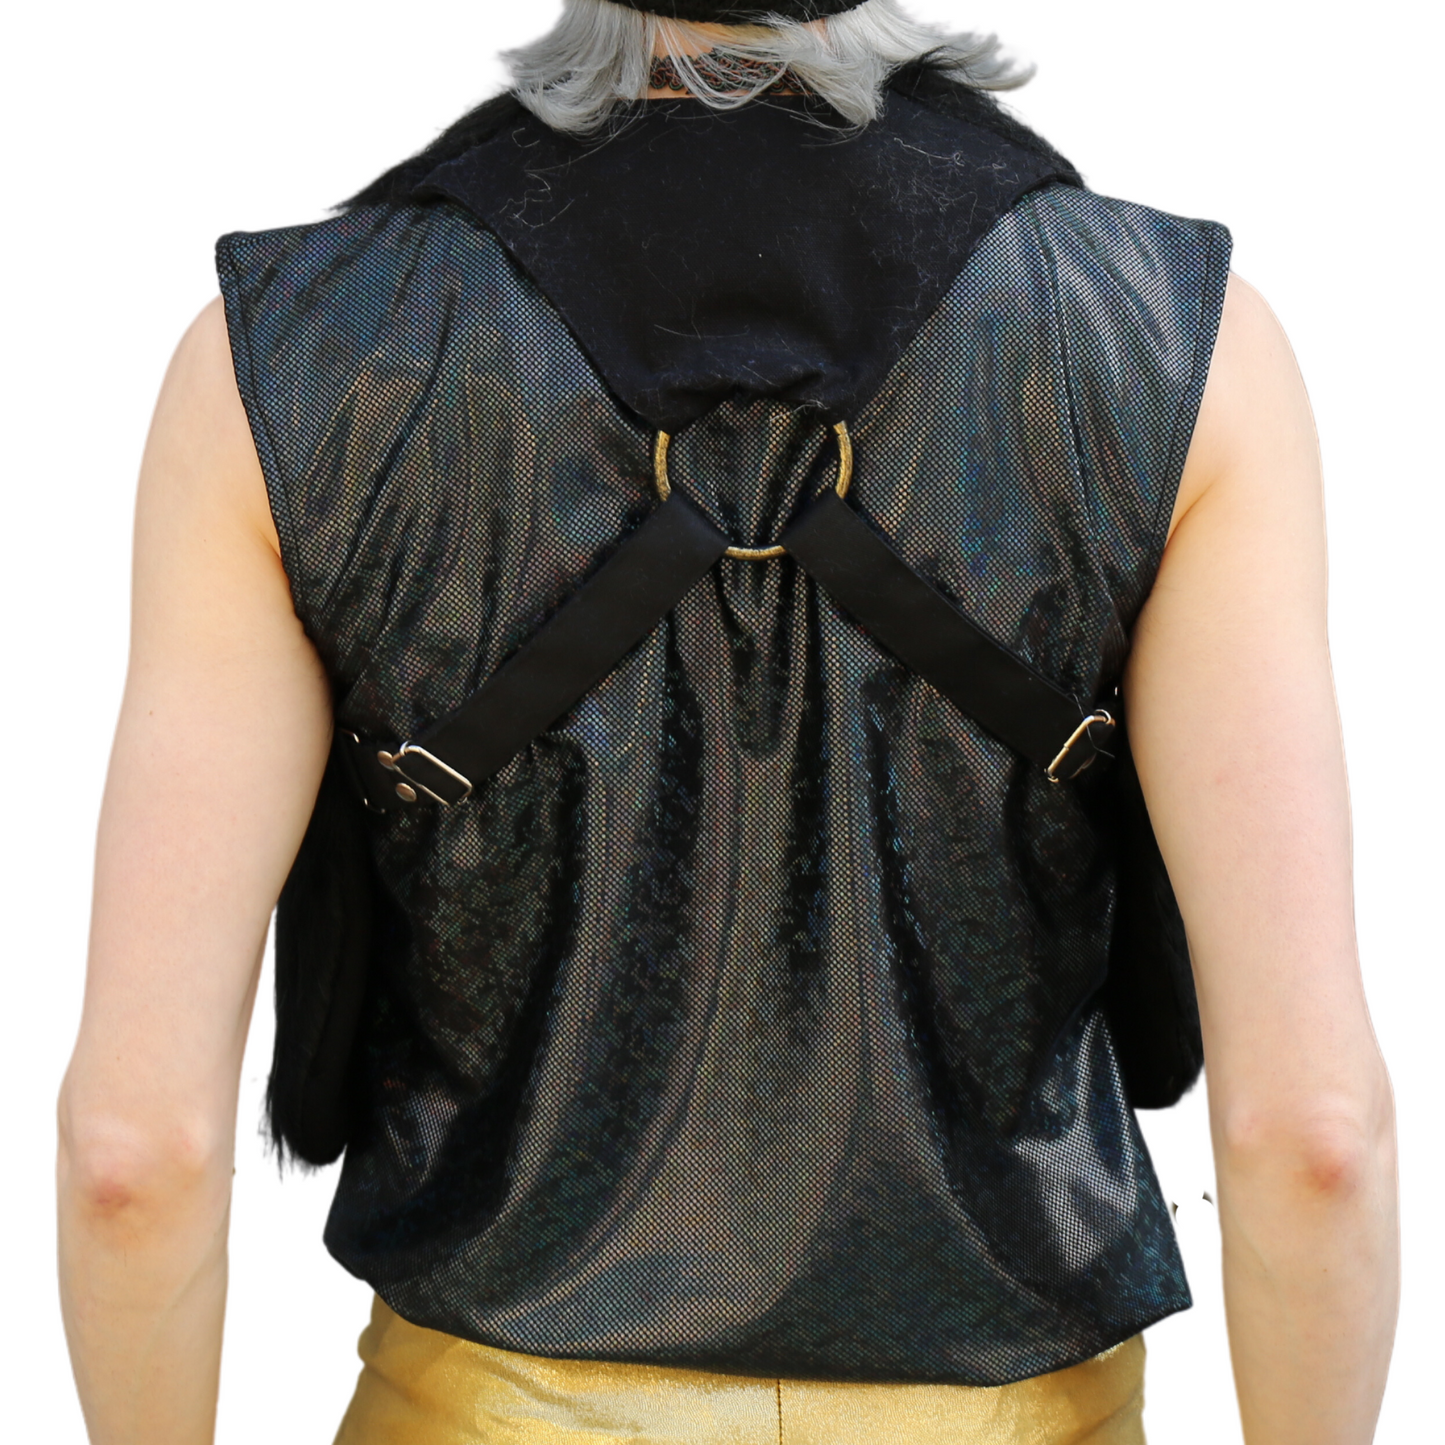 The VM Short Faux Fur Holster Vest